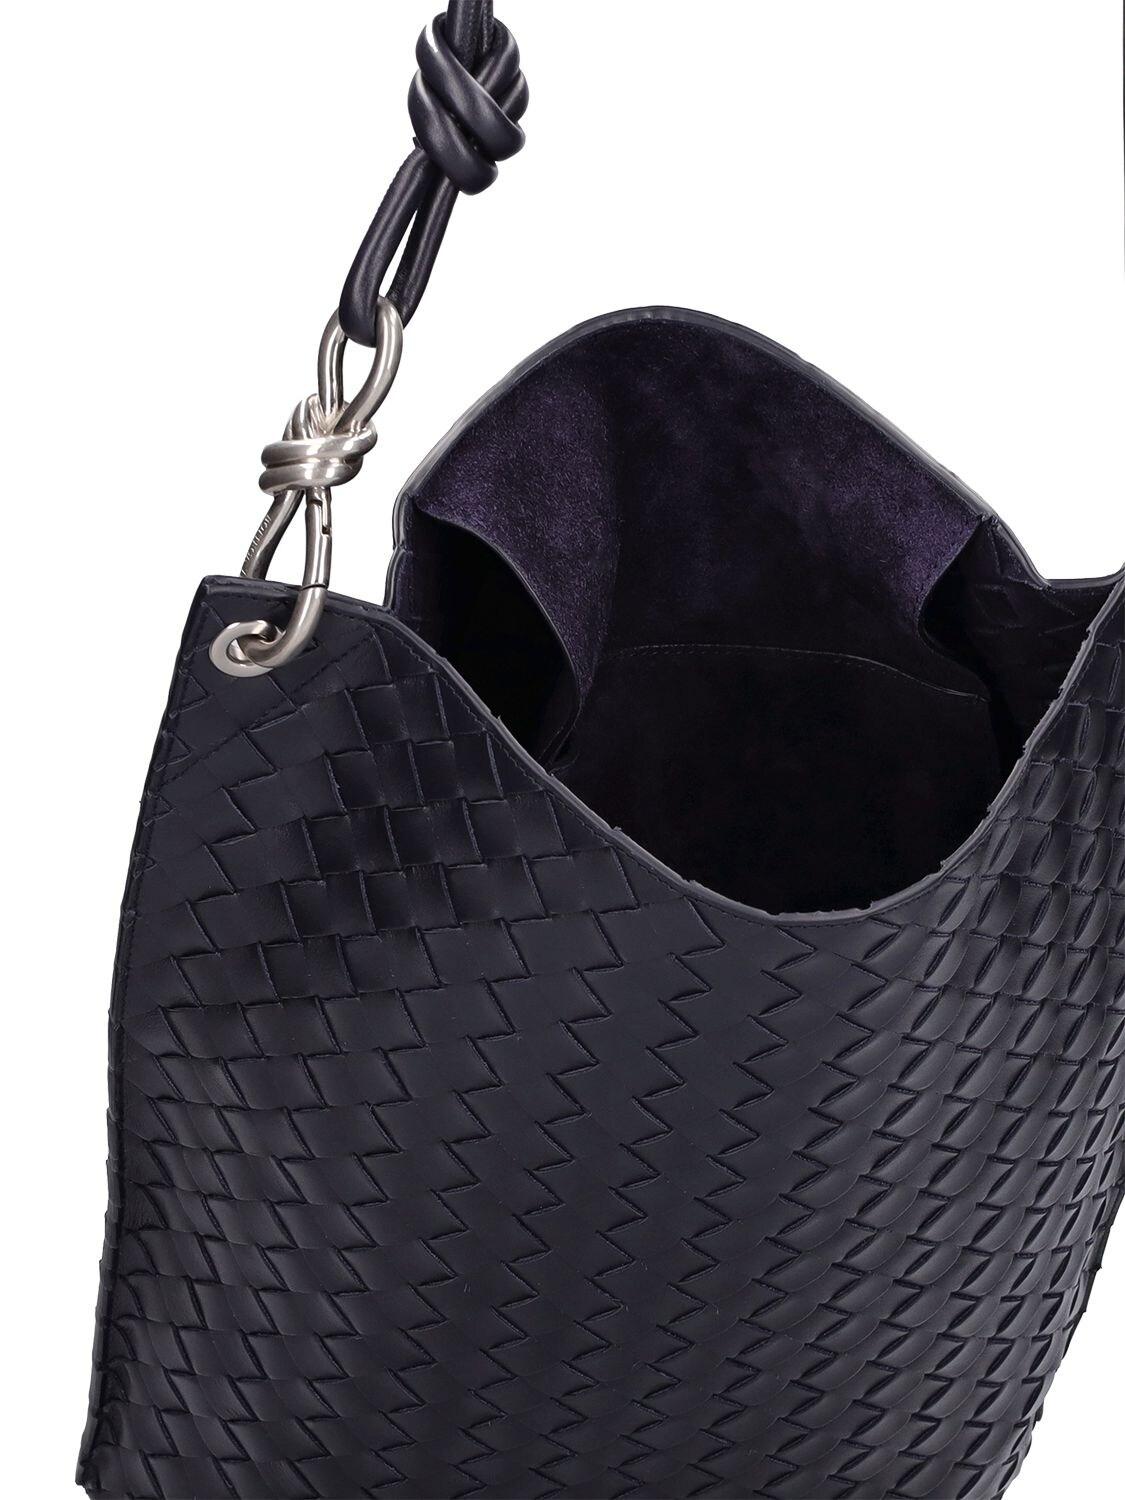 Bottega Veneta® Men's Medium Knot Bucket in Black. Shop online now.